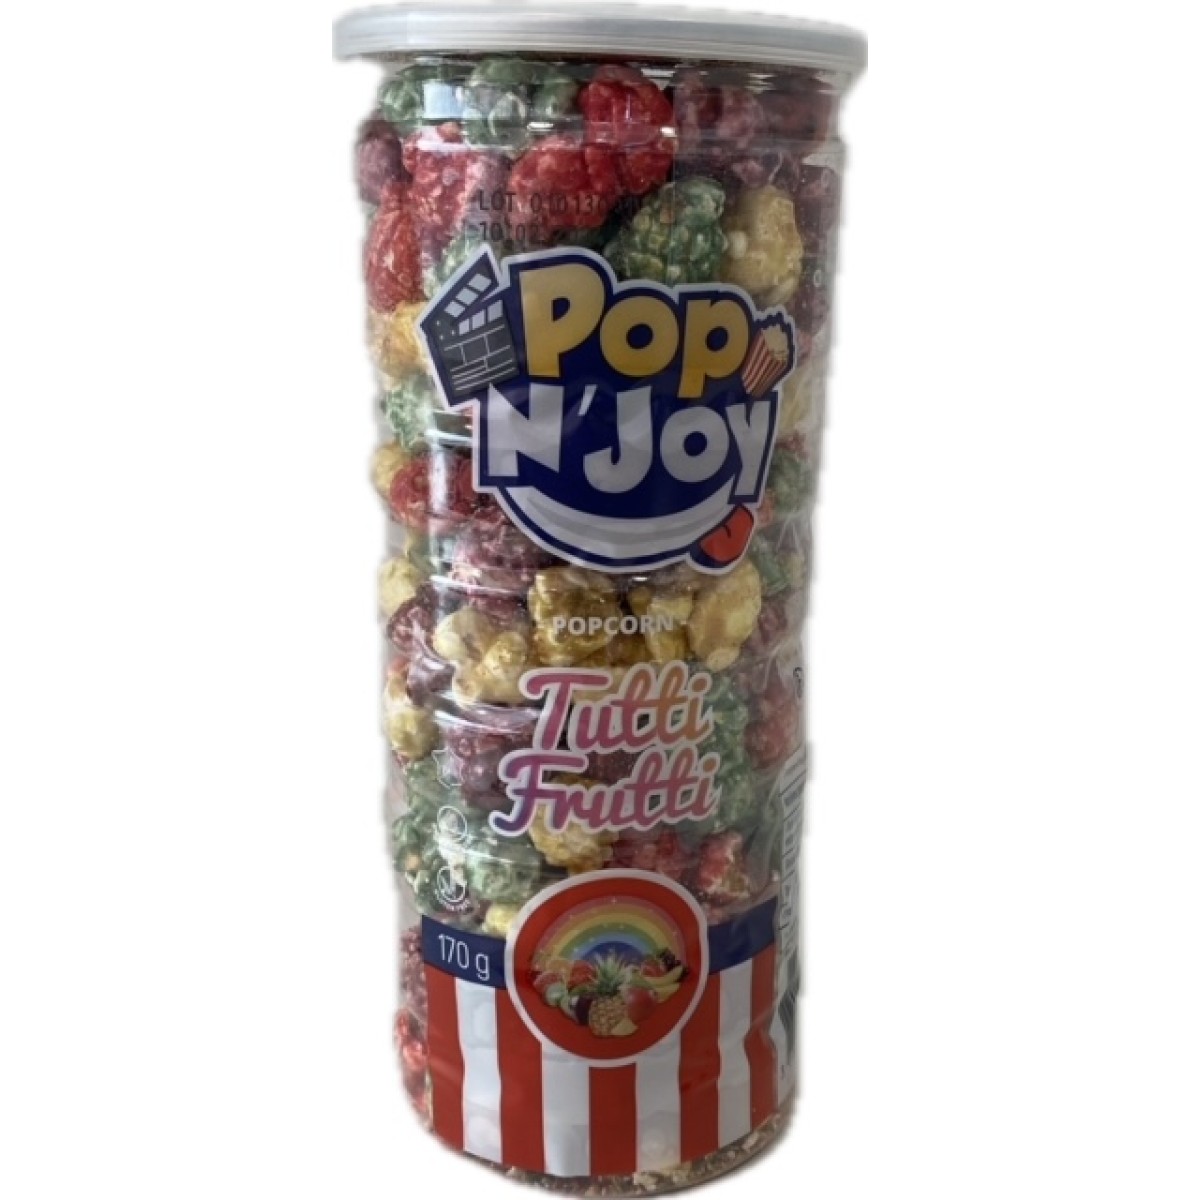 popcorn pop n'joy tutti frutti